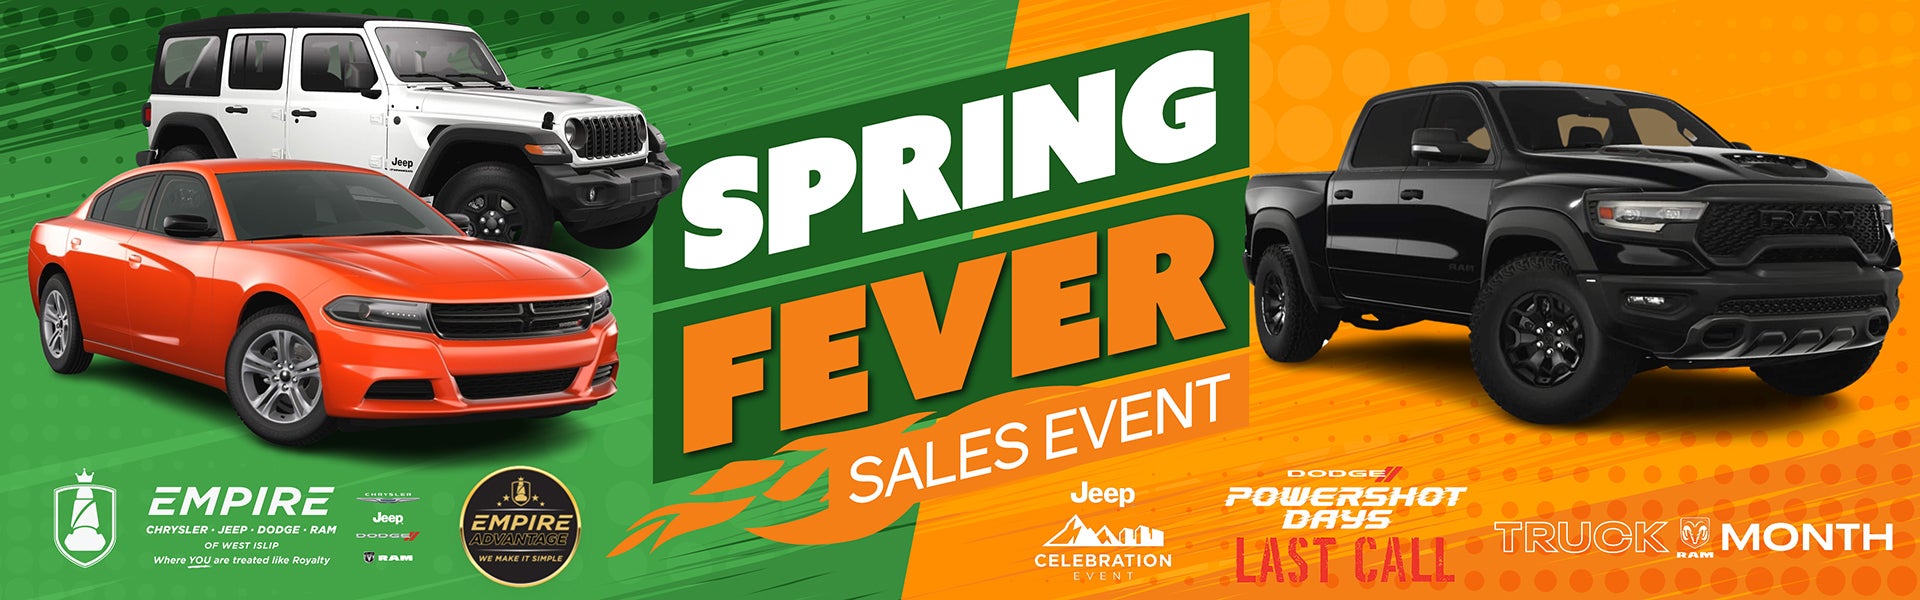 Spring Fever Sales Event 